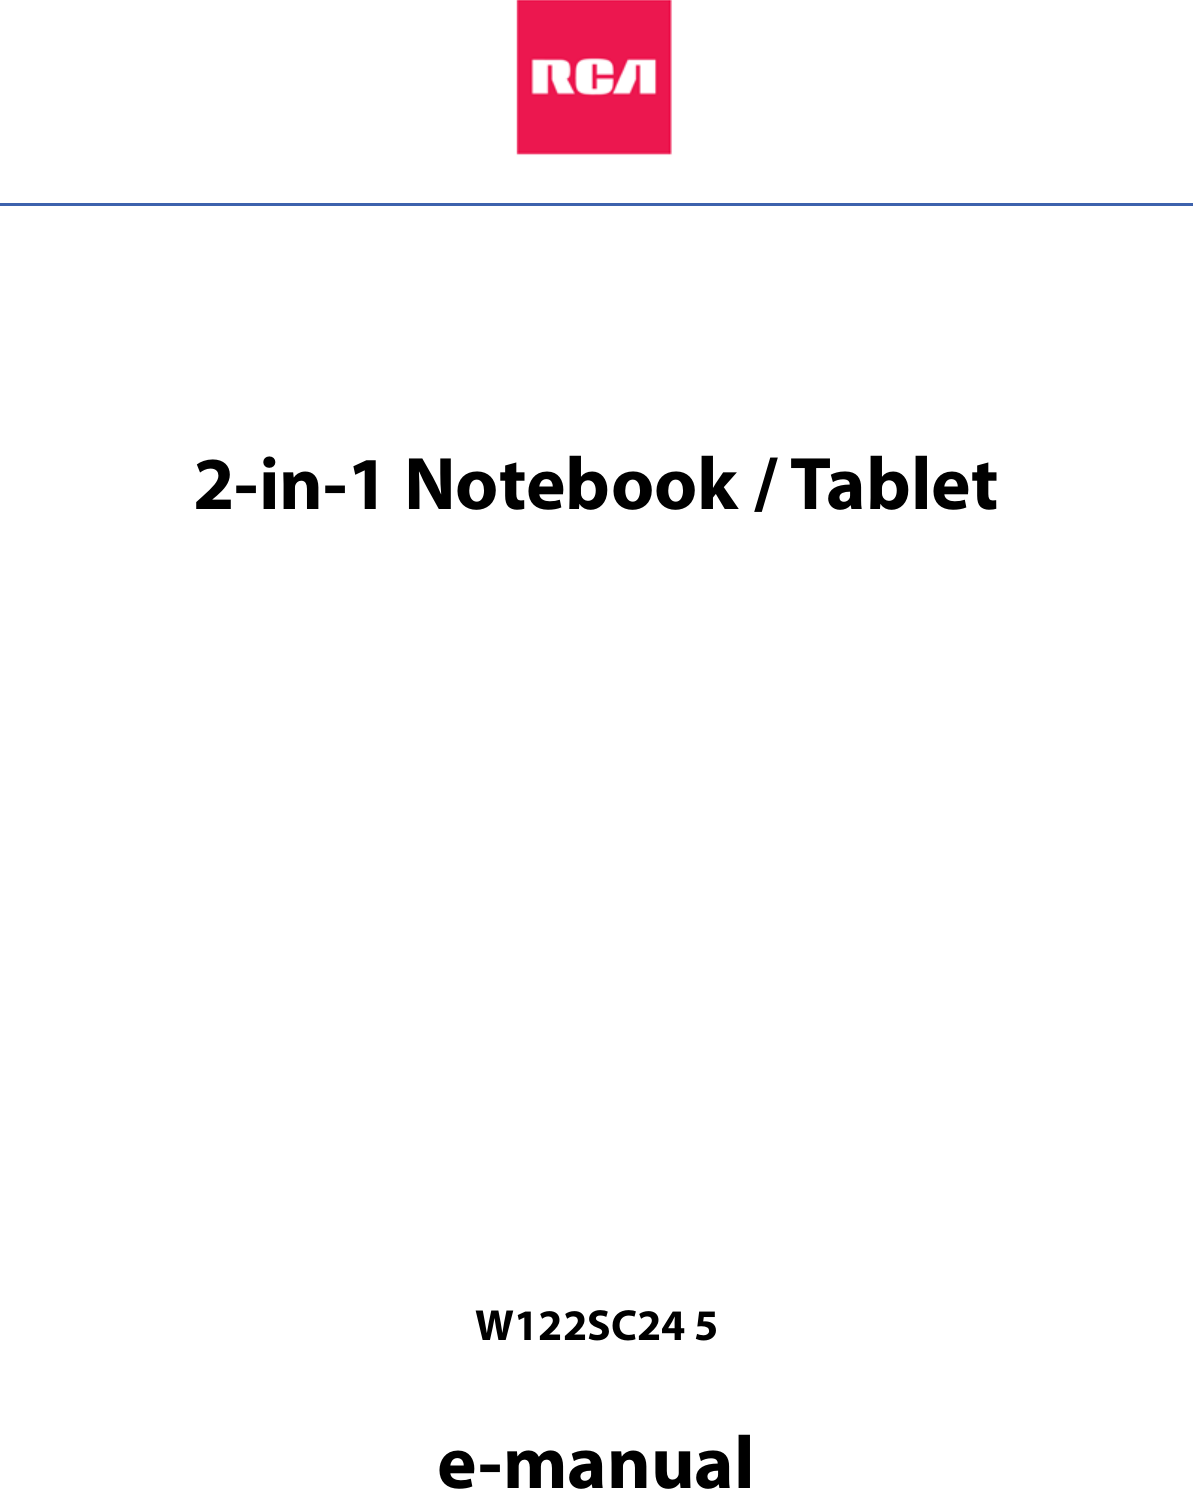 W122SC24 52-in-1 Notebook / Tablete-manual